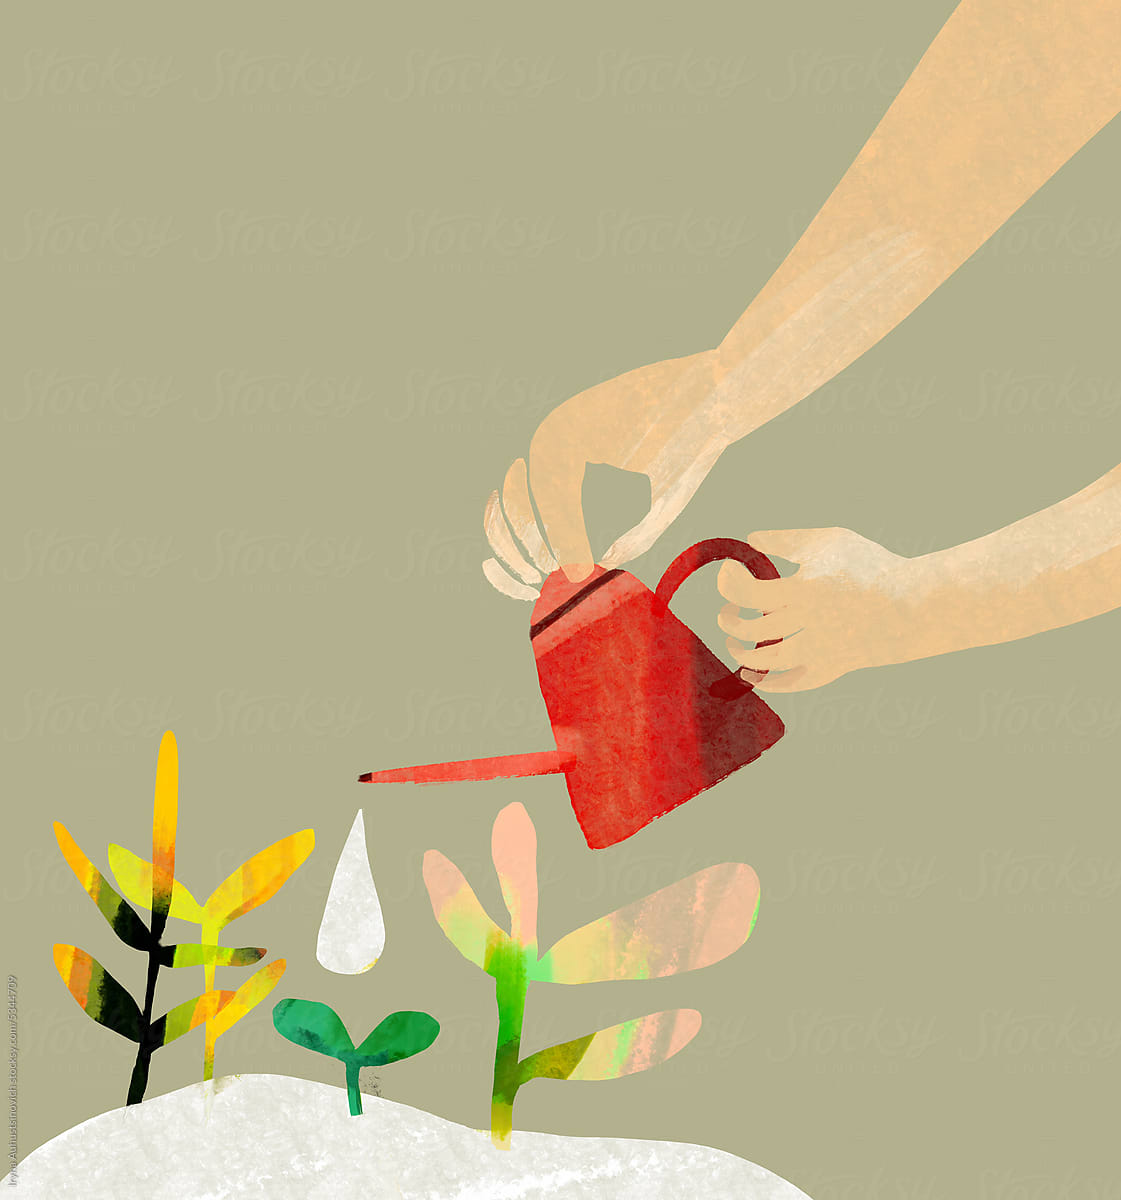 Hands watering the plants